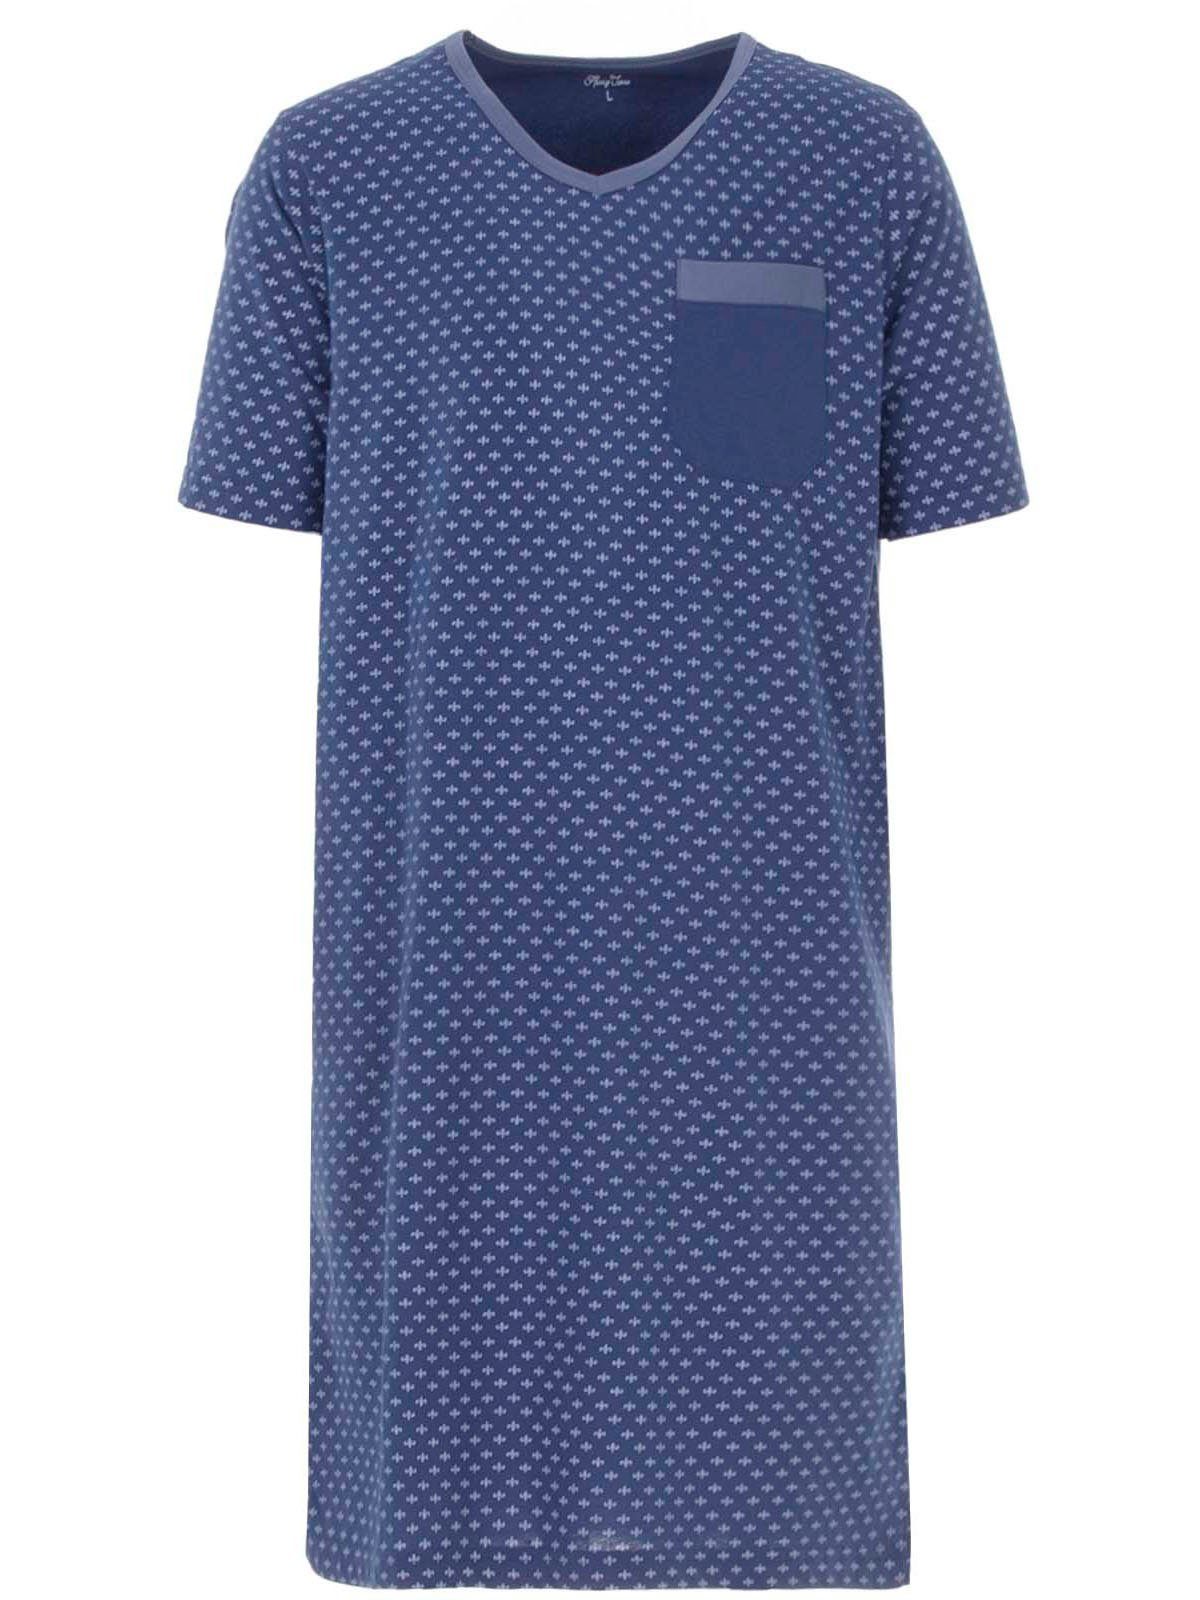 Henry Terre Nachthemd Nachthemd Kurzarm - Lilie navy